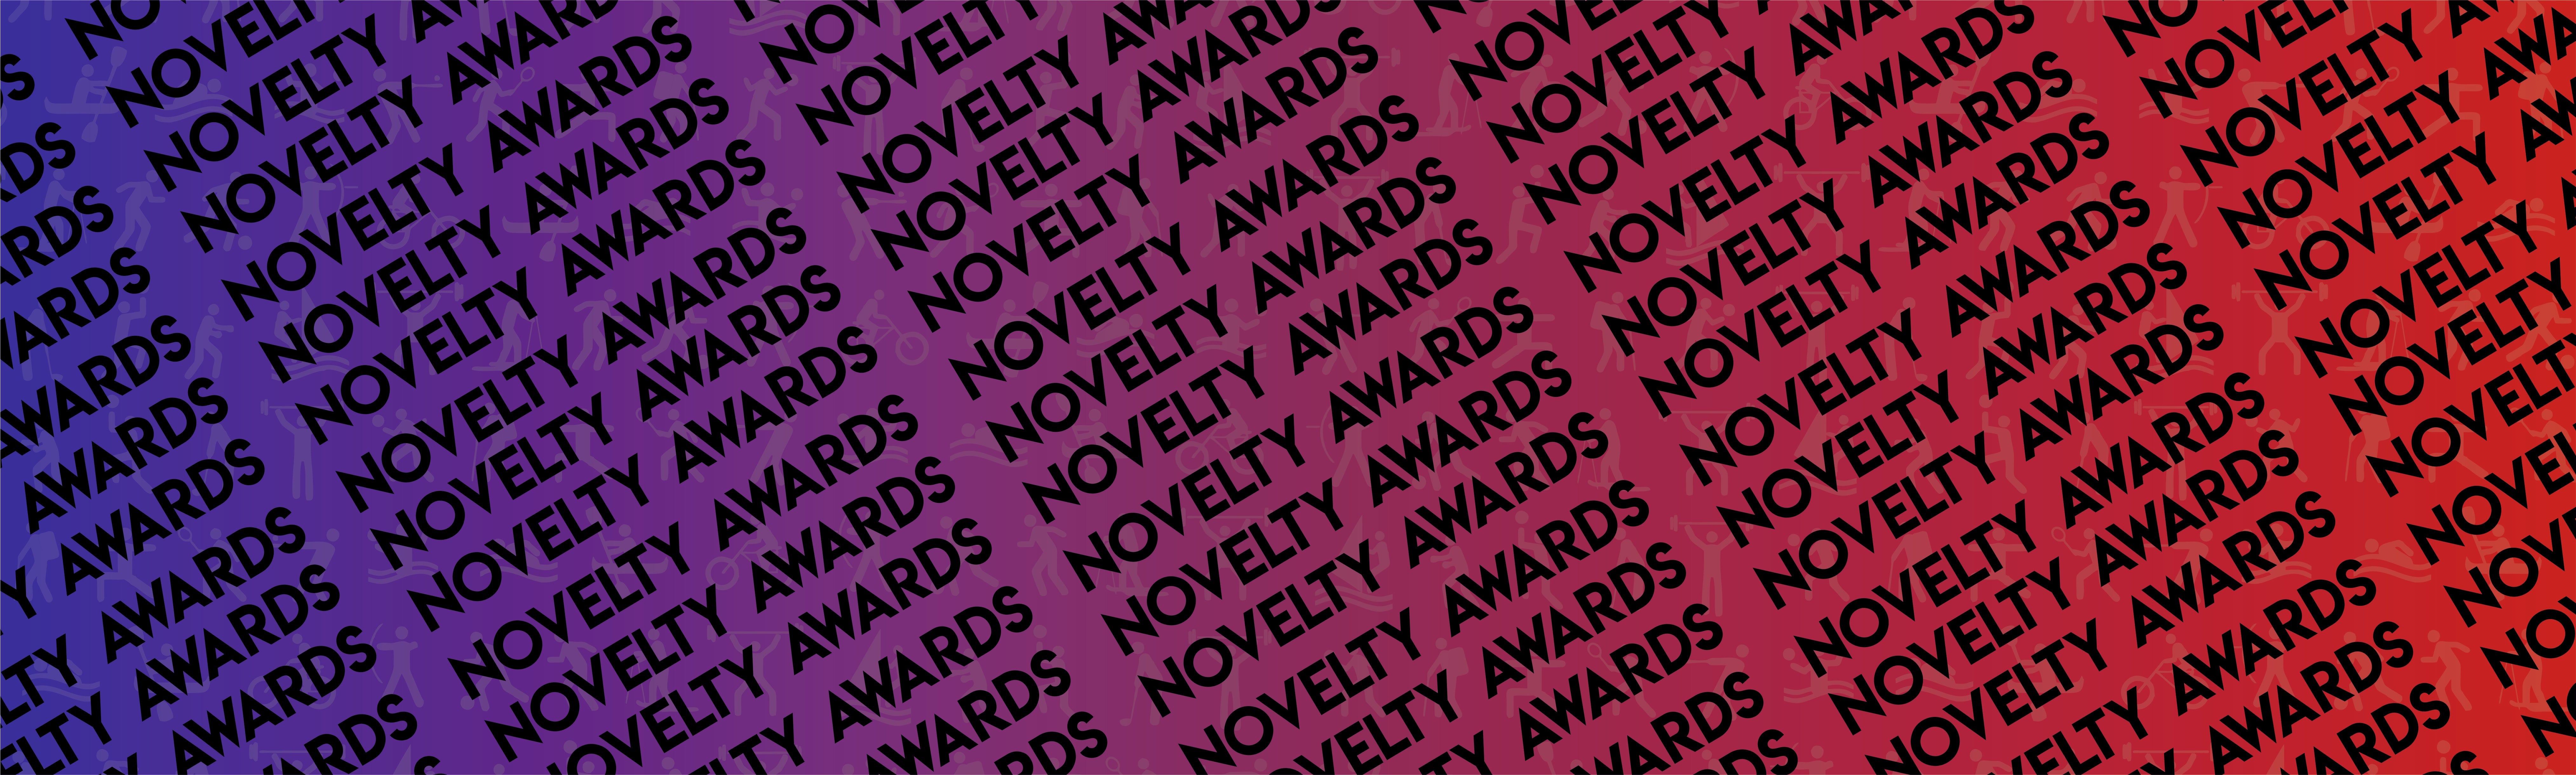 Novelty Awards